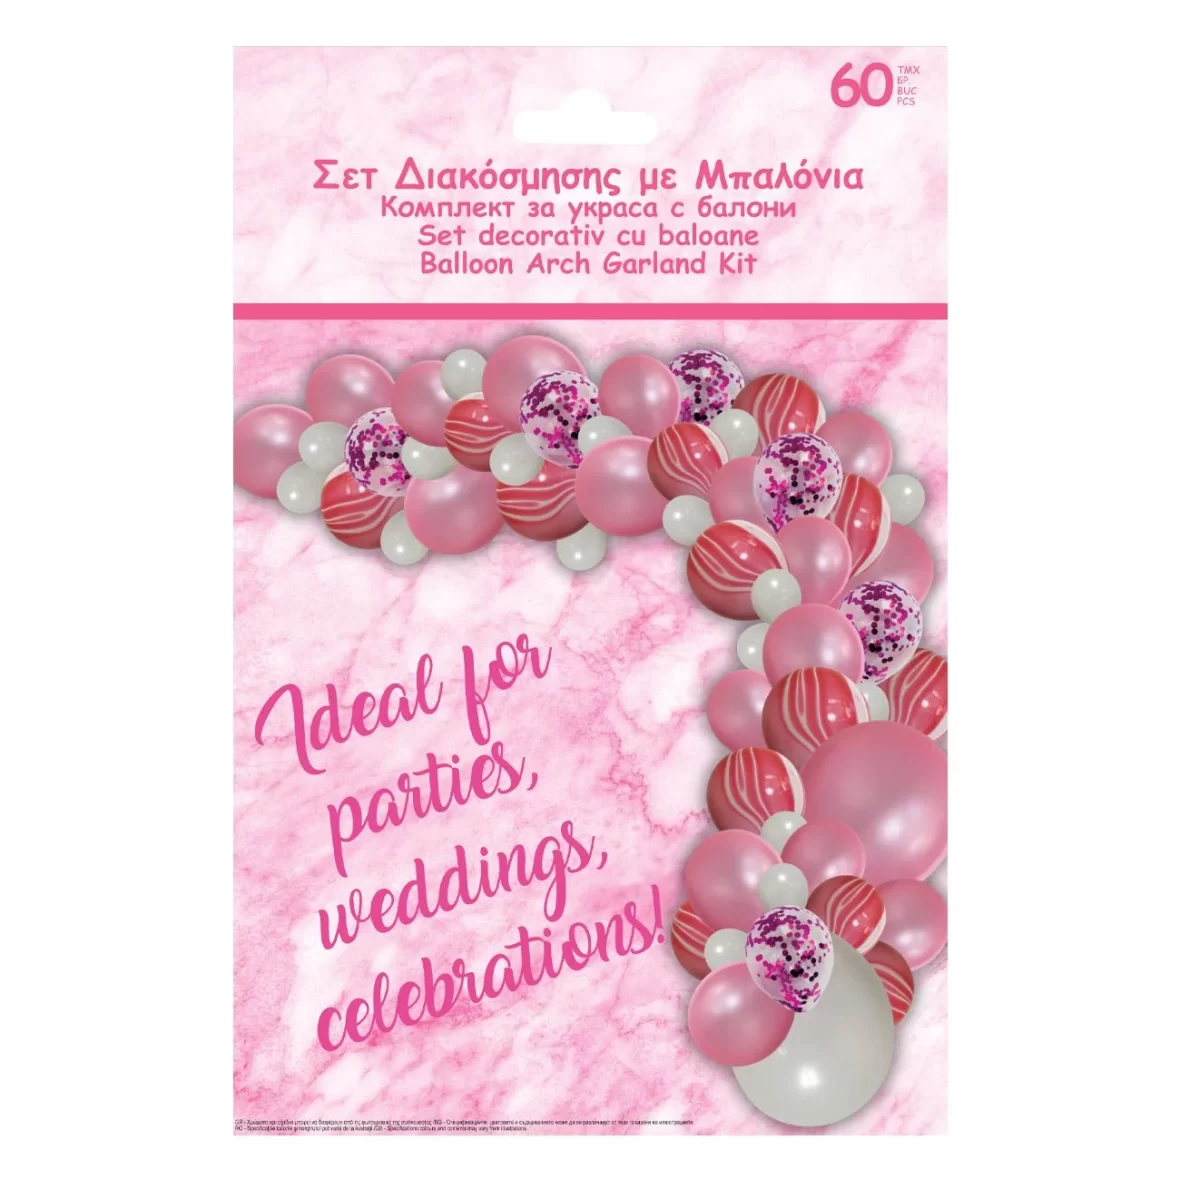 Arcada baloane aniversare petrecere, culori roz si alb, cu baloane confetti